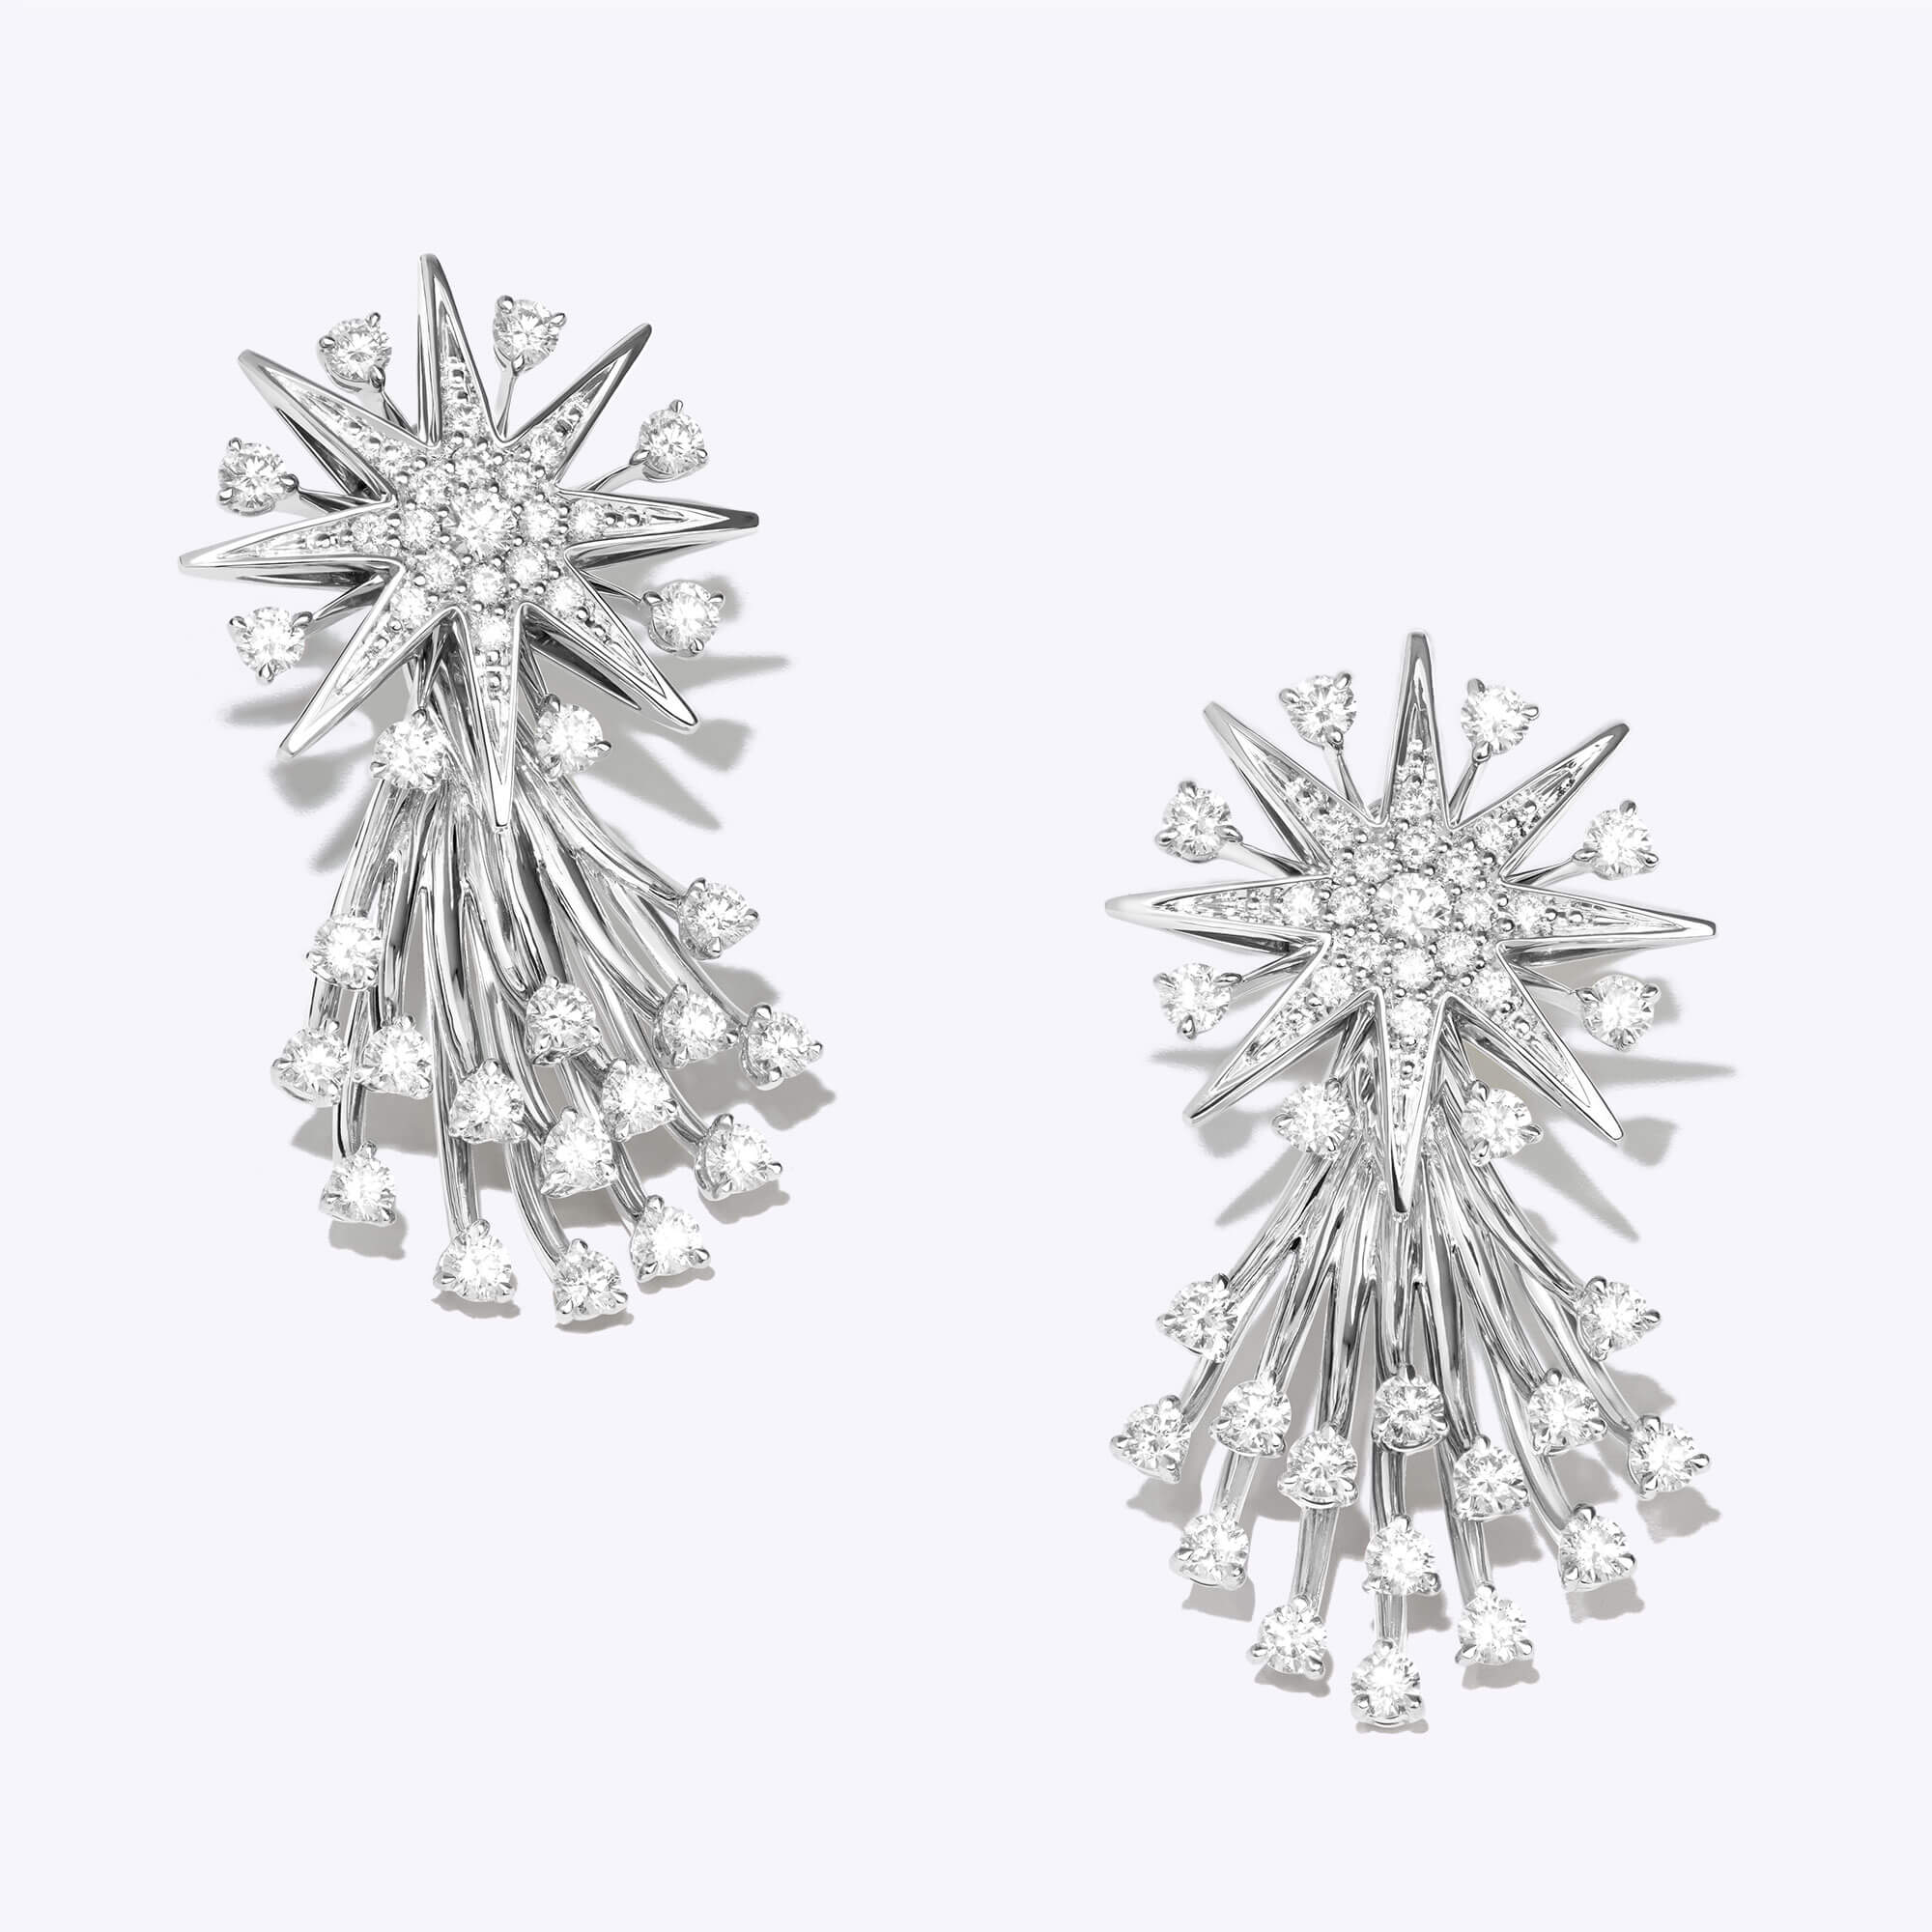 Garrard Starlight Jewellery Collection Diamond earrings